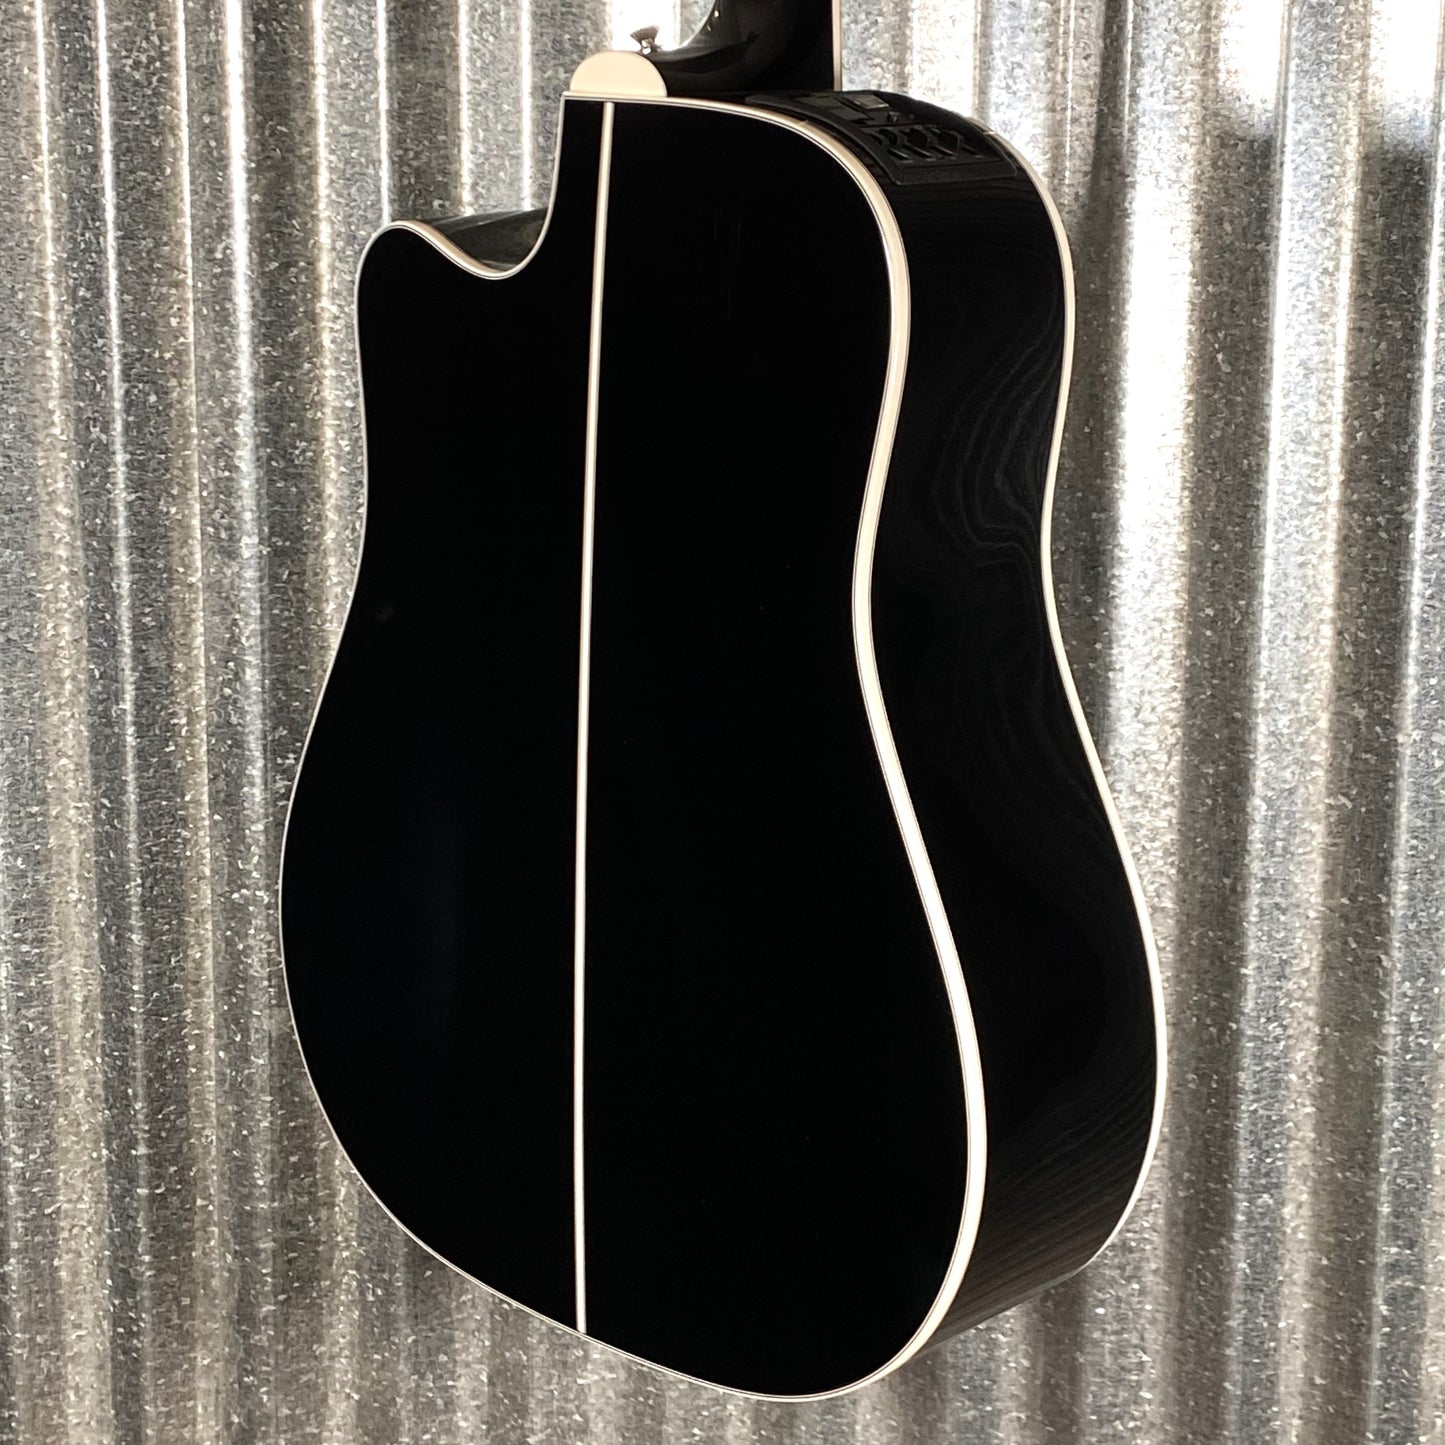 Takamine GC34CE Black Cutaway Acoustic Electric Guitar & Bag #2935